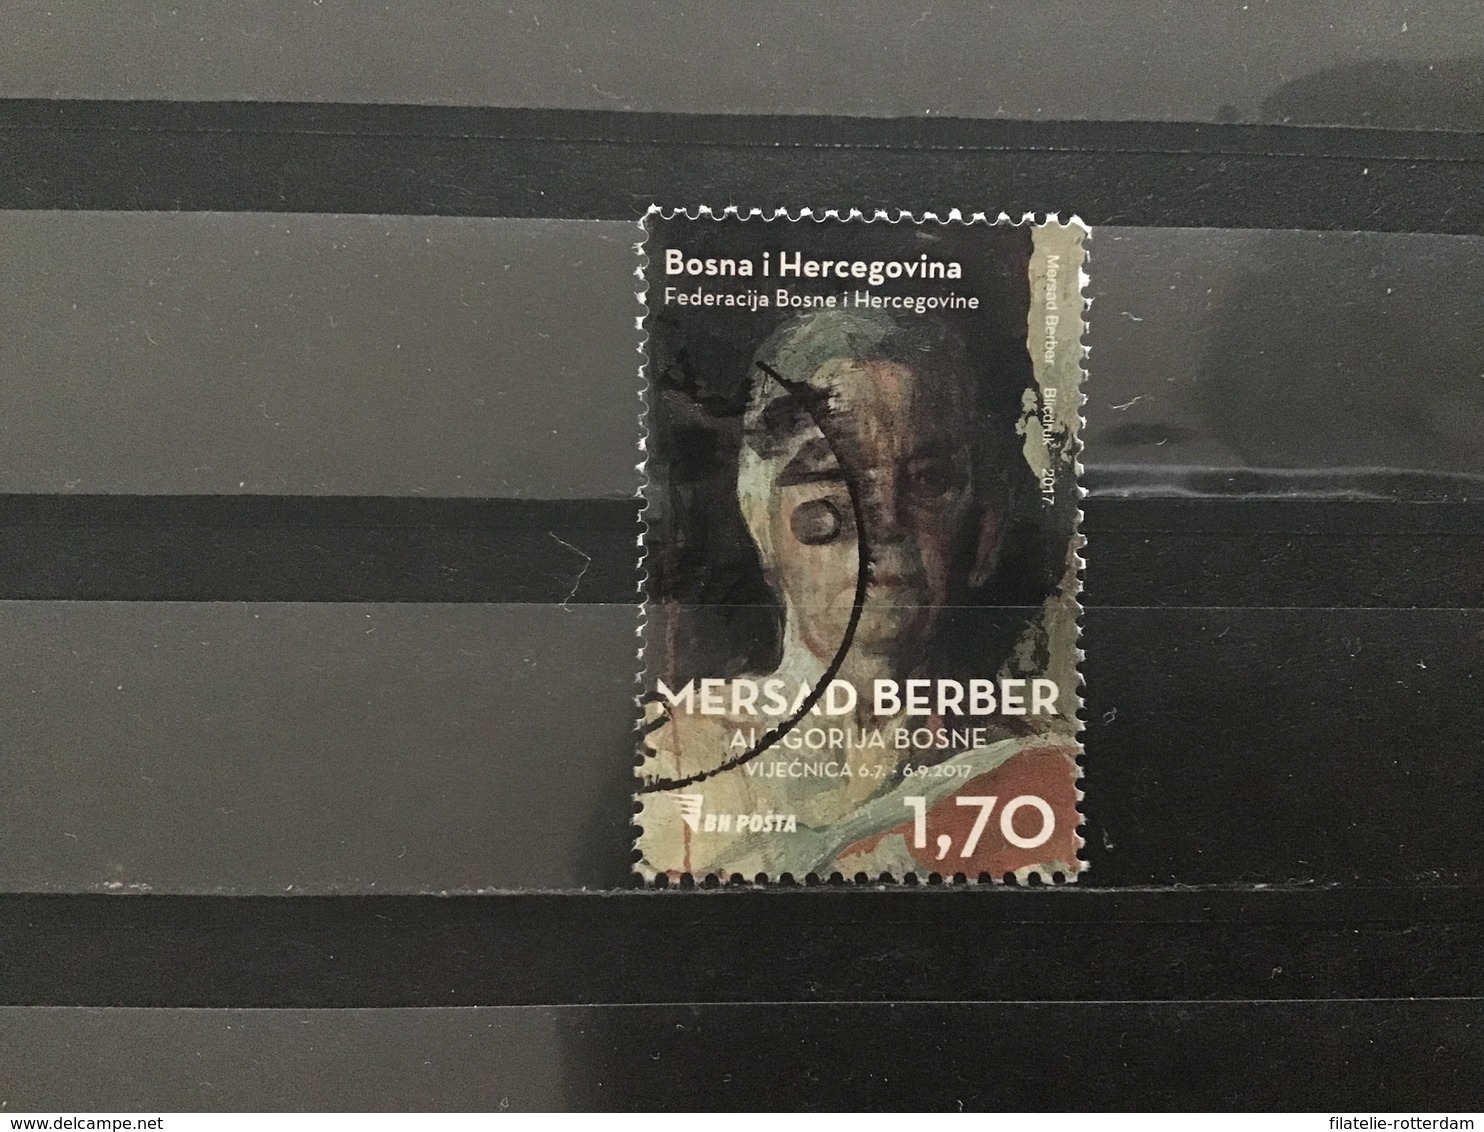 Bosnië & Herzegovina / Bosnia - Mersad Berber (1.70) 2017 - Bosnien-Herzegowina